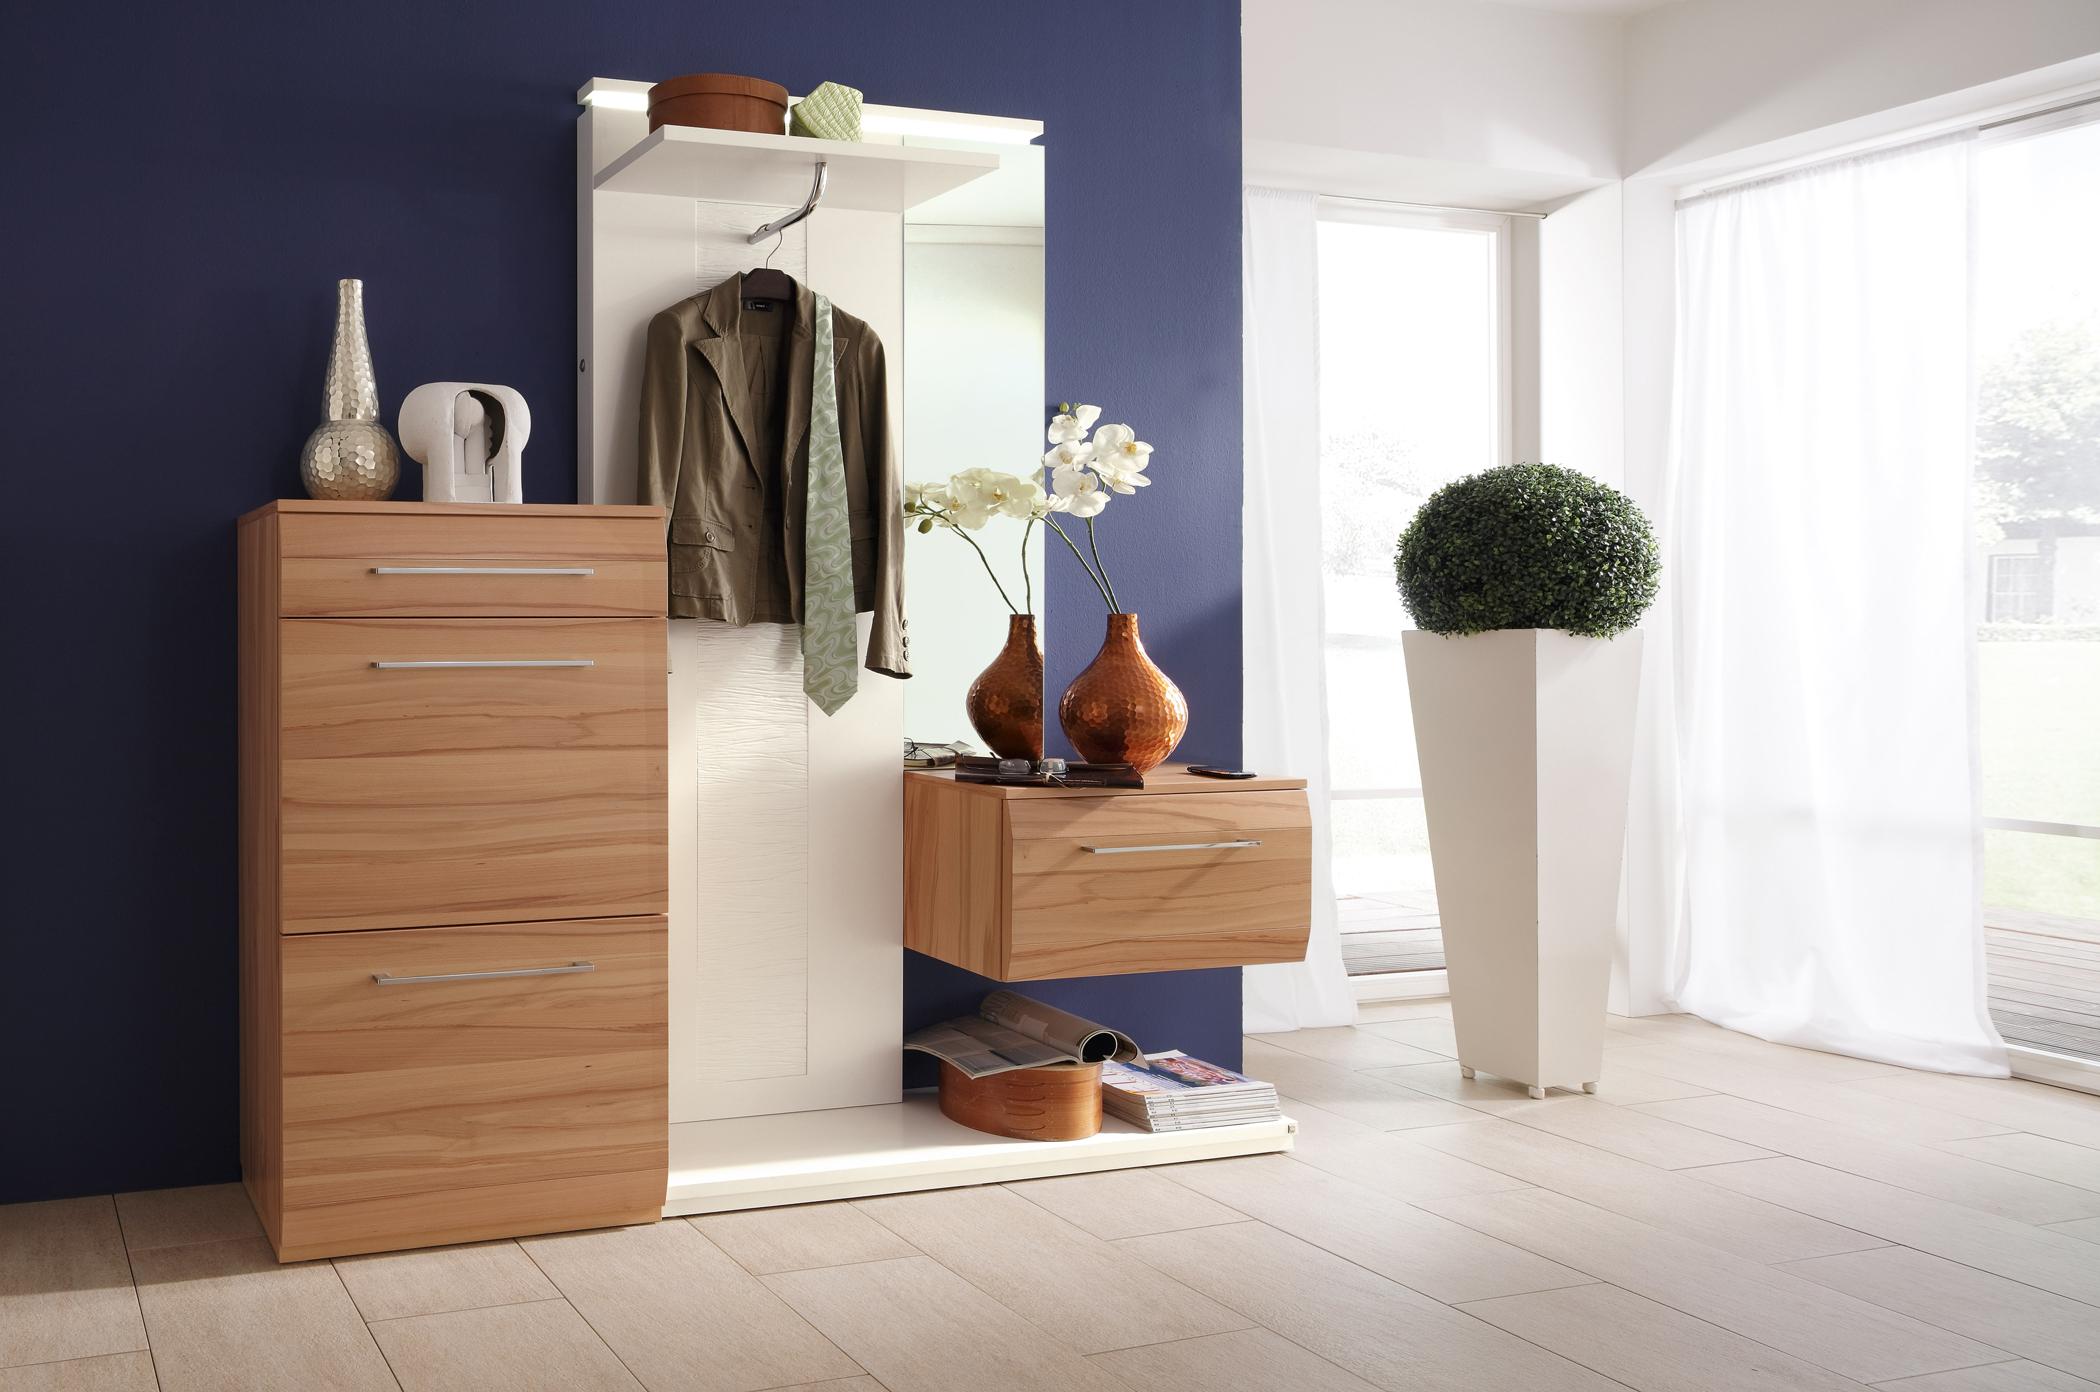 Garderoben-System aus Holz #garderobe #holzgarderobe ©Musterring